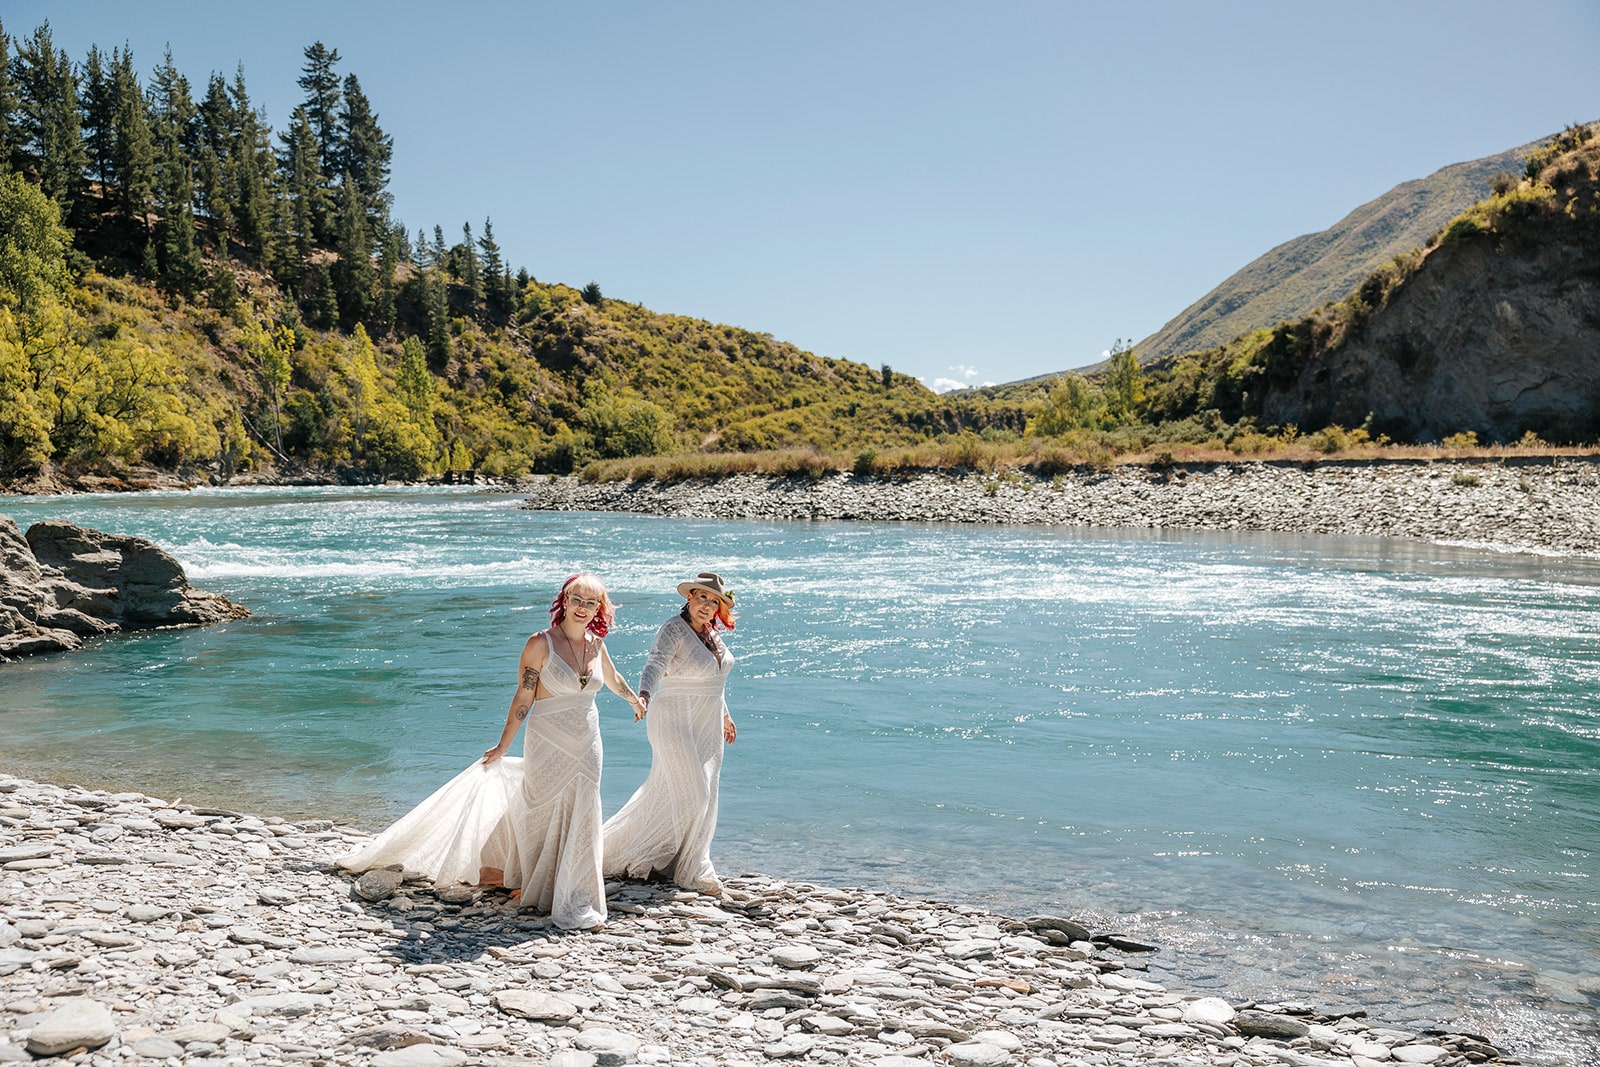 LBGTQ Heli Wedding with two brides on Coromandel Peak